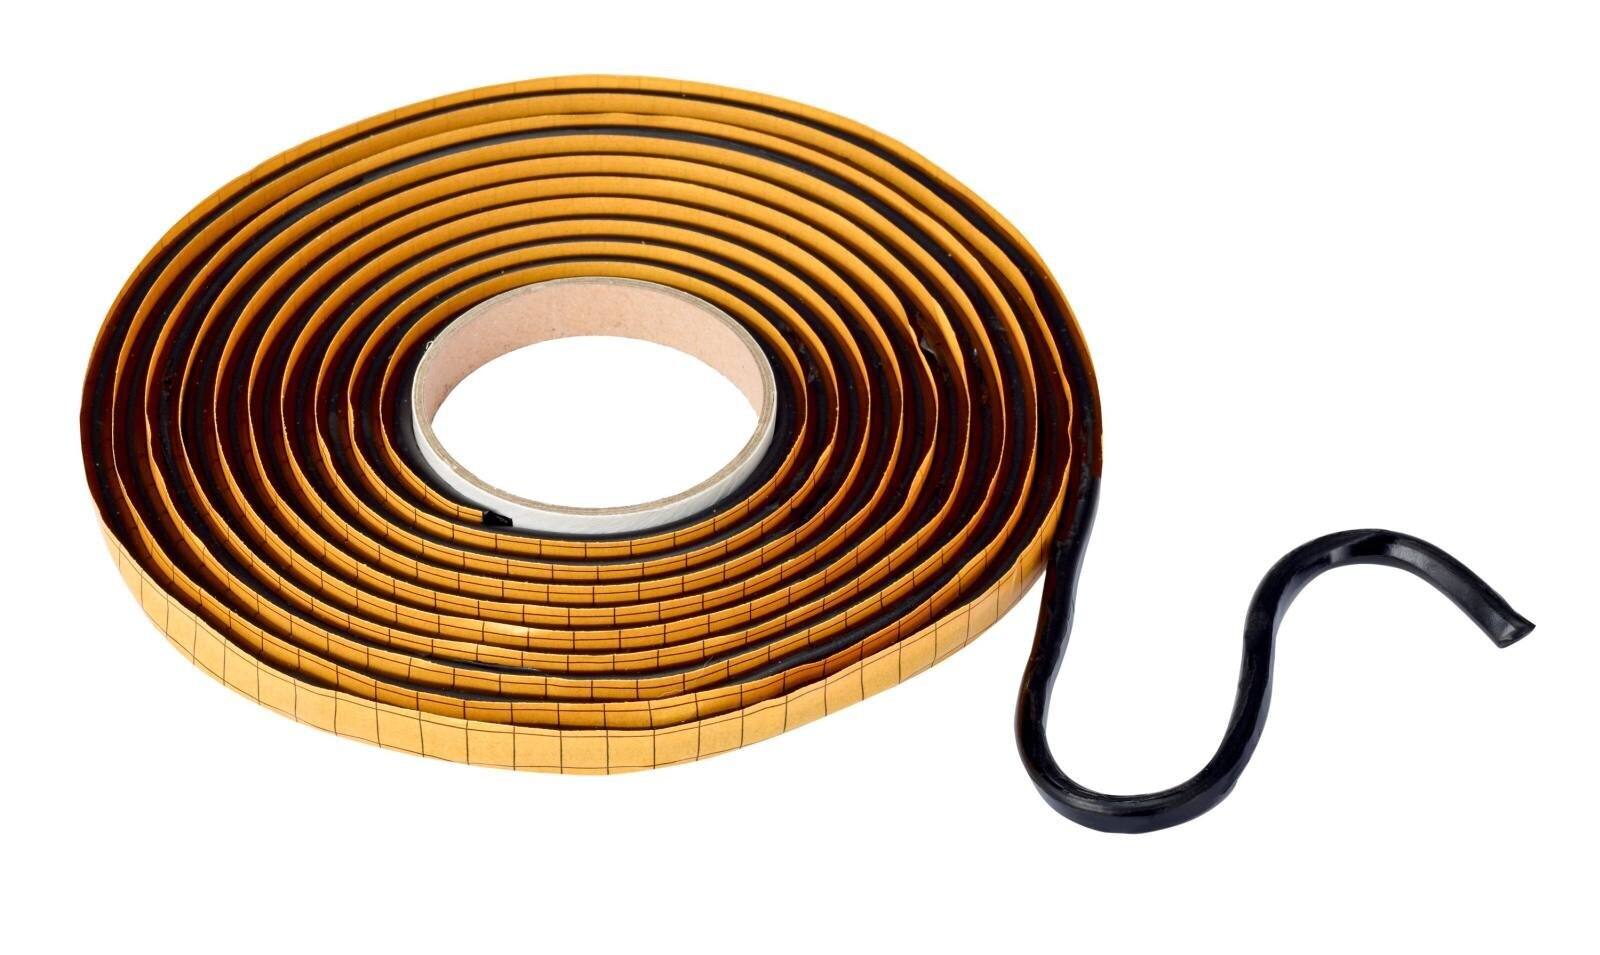 3M Scotch-Weld cordón redondo a base de caucho butílico 5313, negro, diámetro 4 mm x 11 m